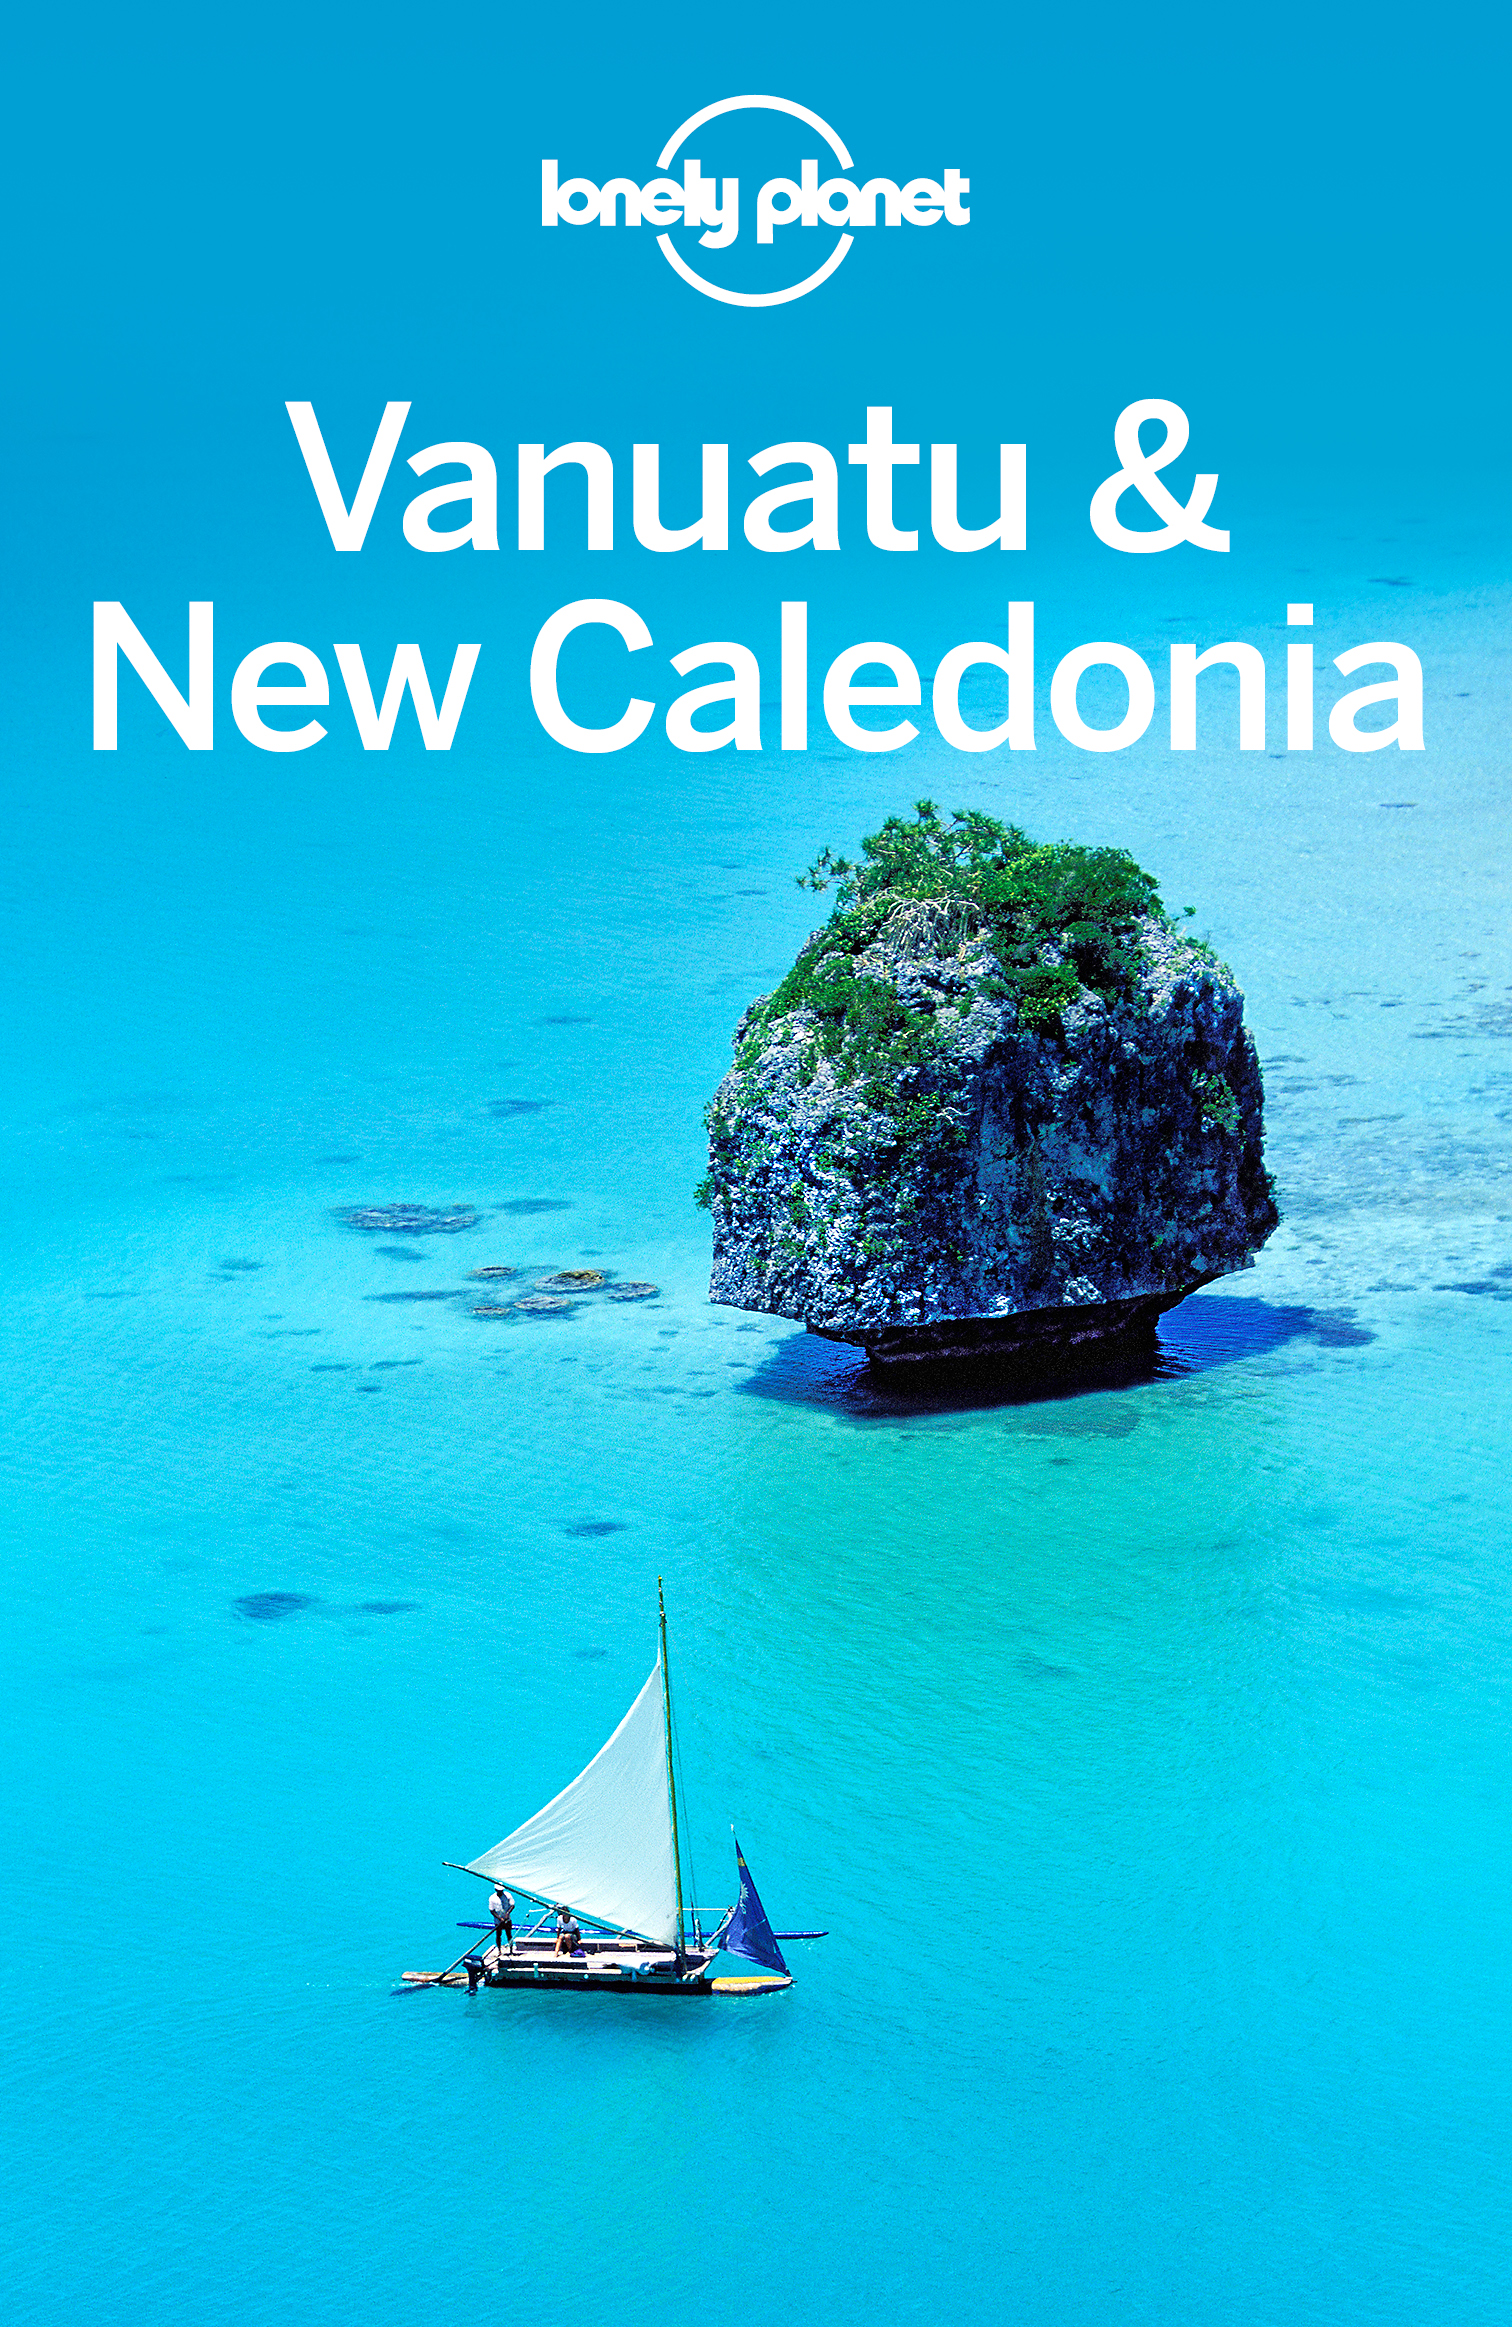 Vanuatu New Caledonia Travel Guide - image 1